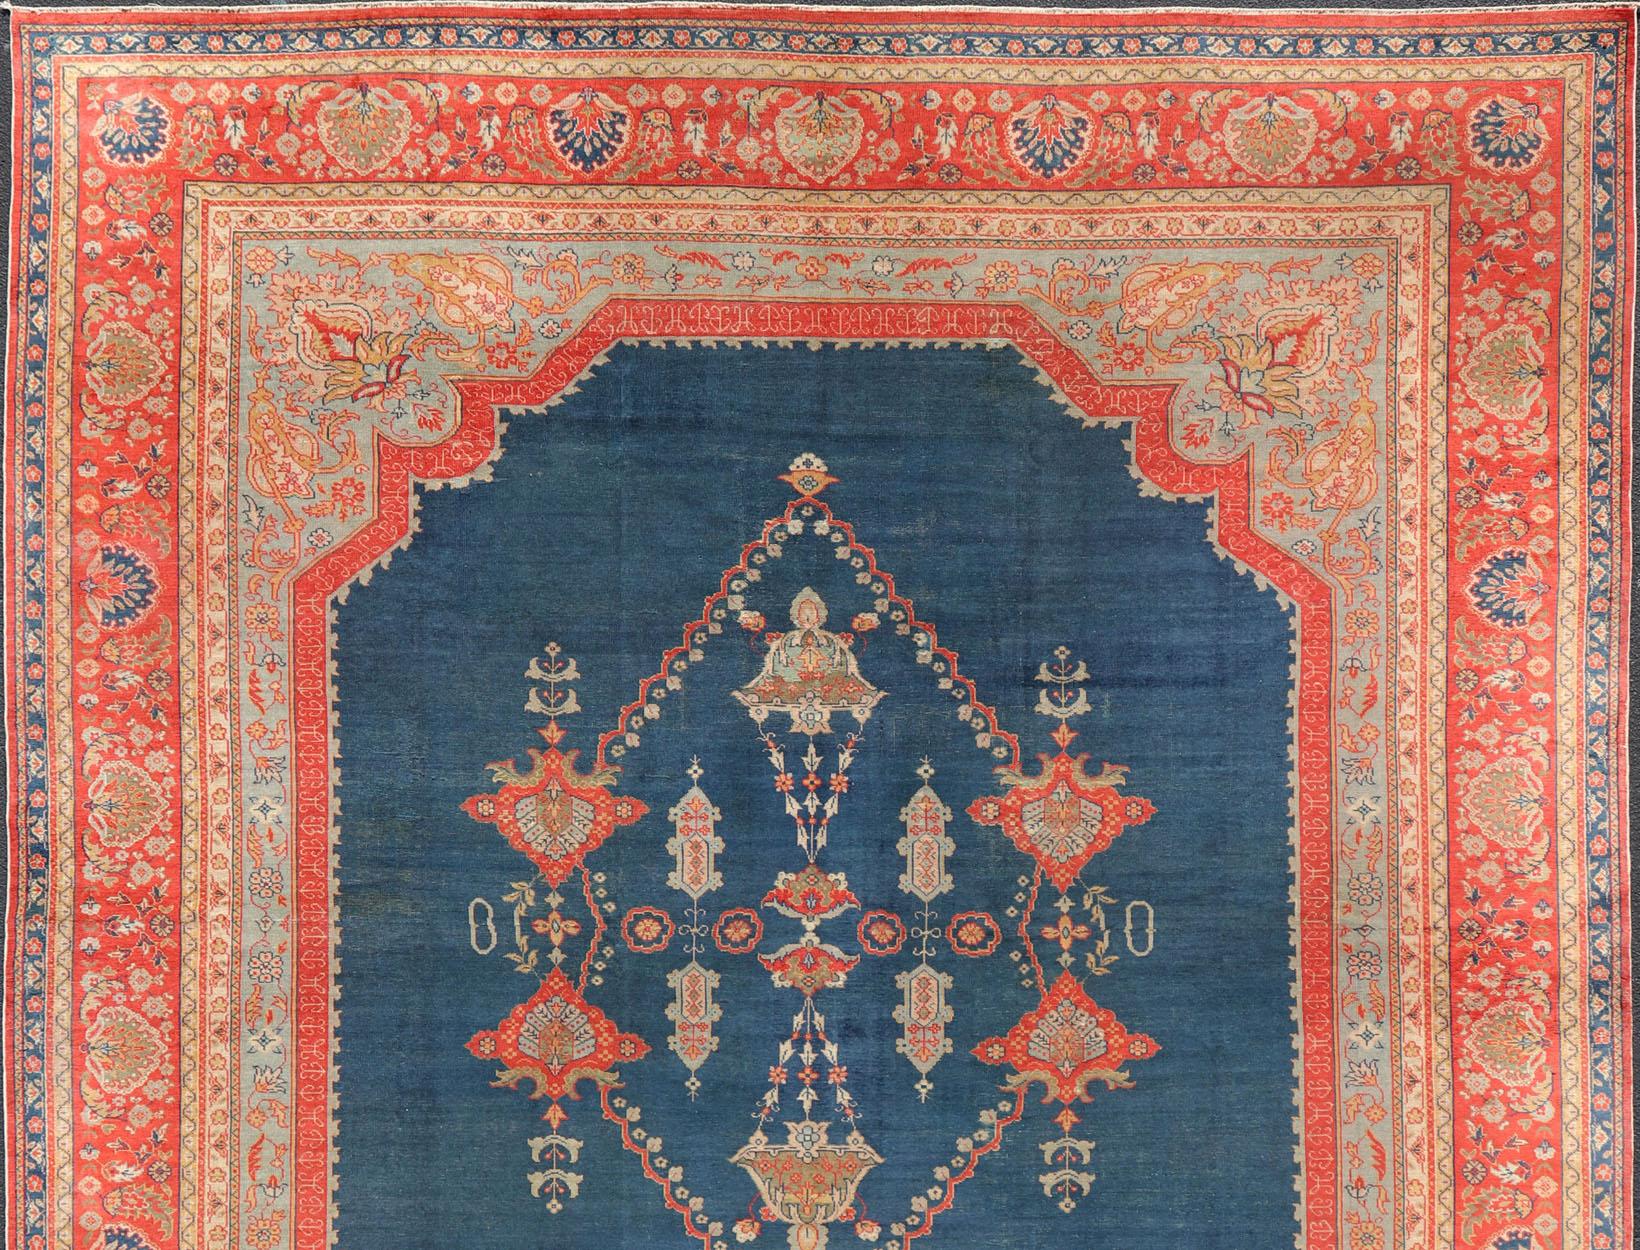 Squared Shape Antique Turkish Oushak rug in vibrant blue, red, medallion geometric design, kwarugs Keivan Woven Arts / R20-0834. Colorful Oushak in vibrant colors. 
Measures: 14'9 x 16'7.
This Antique Turkish Oushak rug showcases a large center